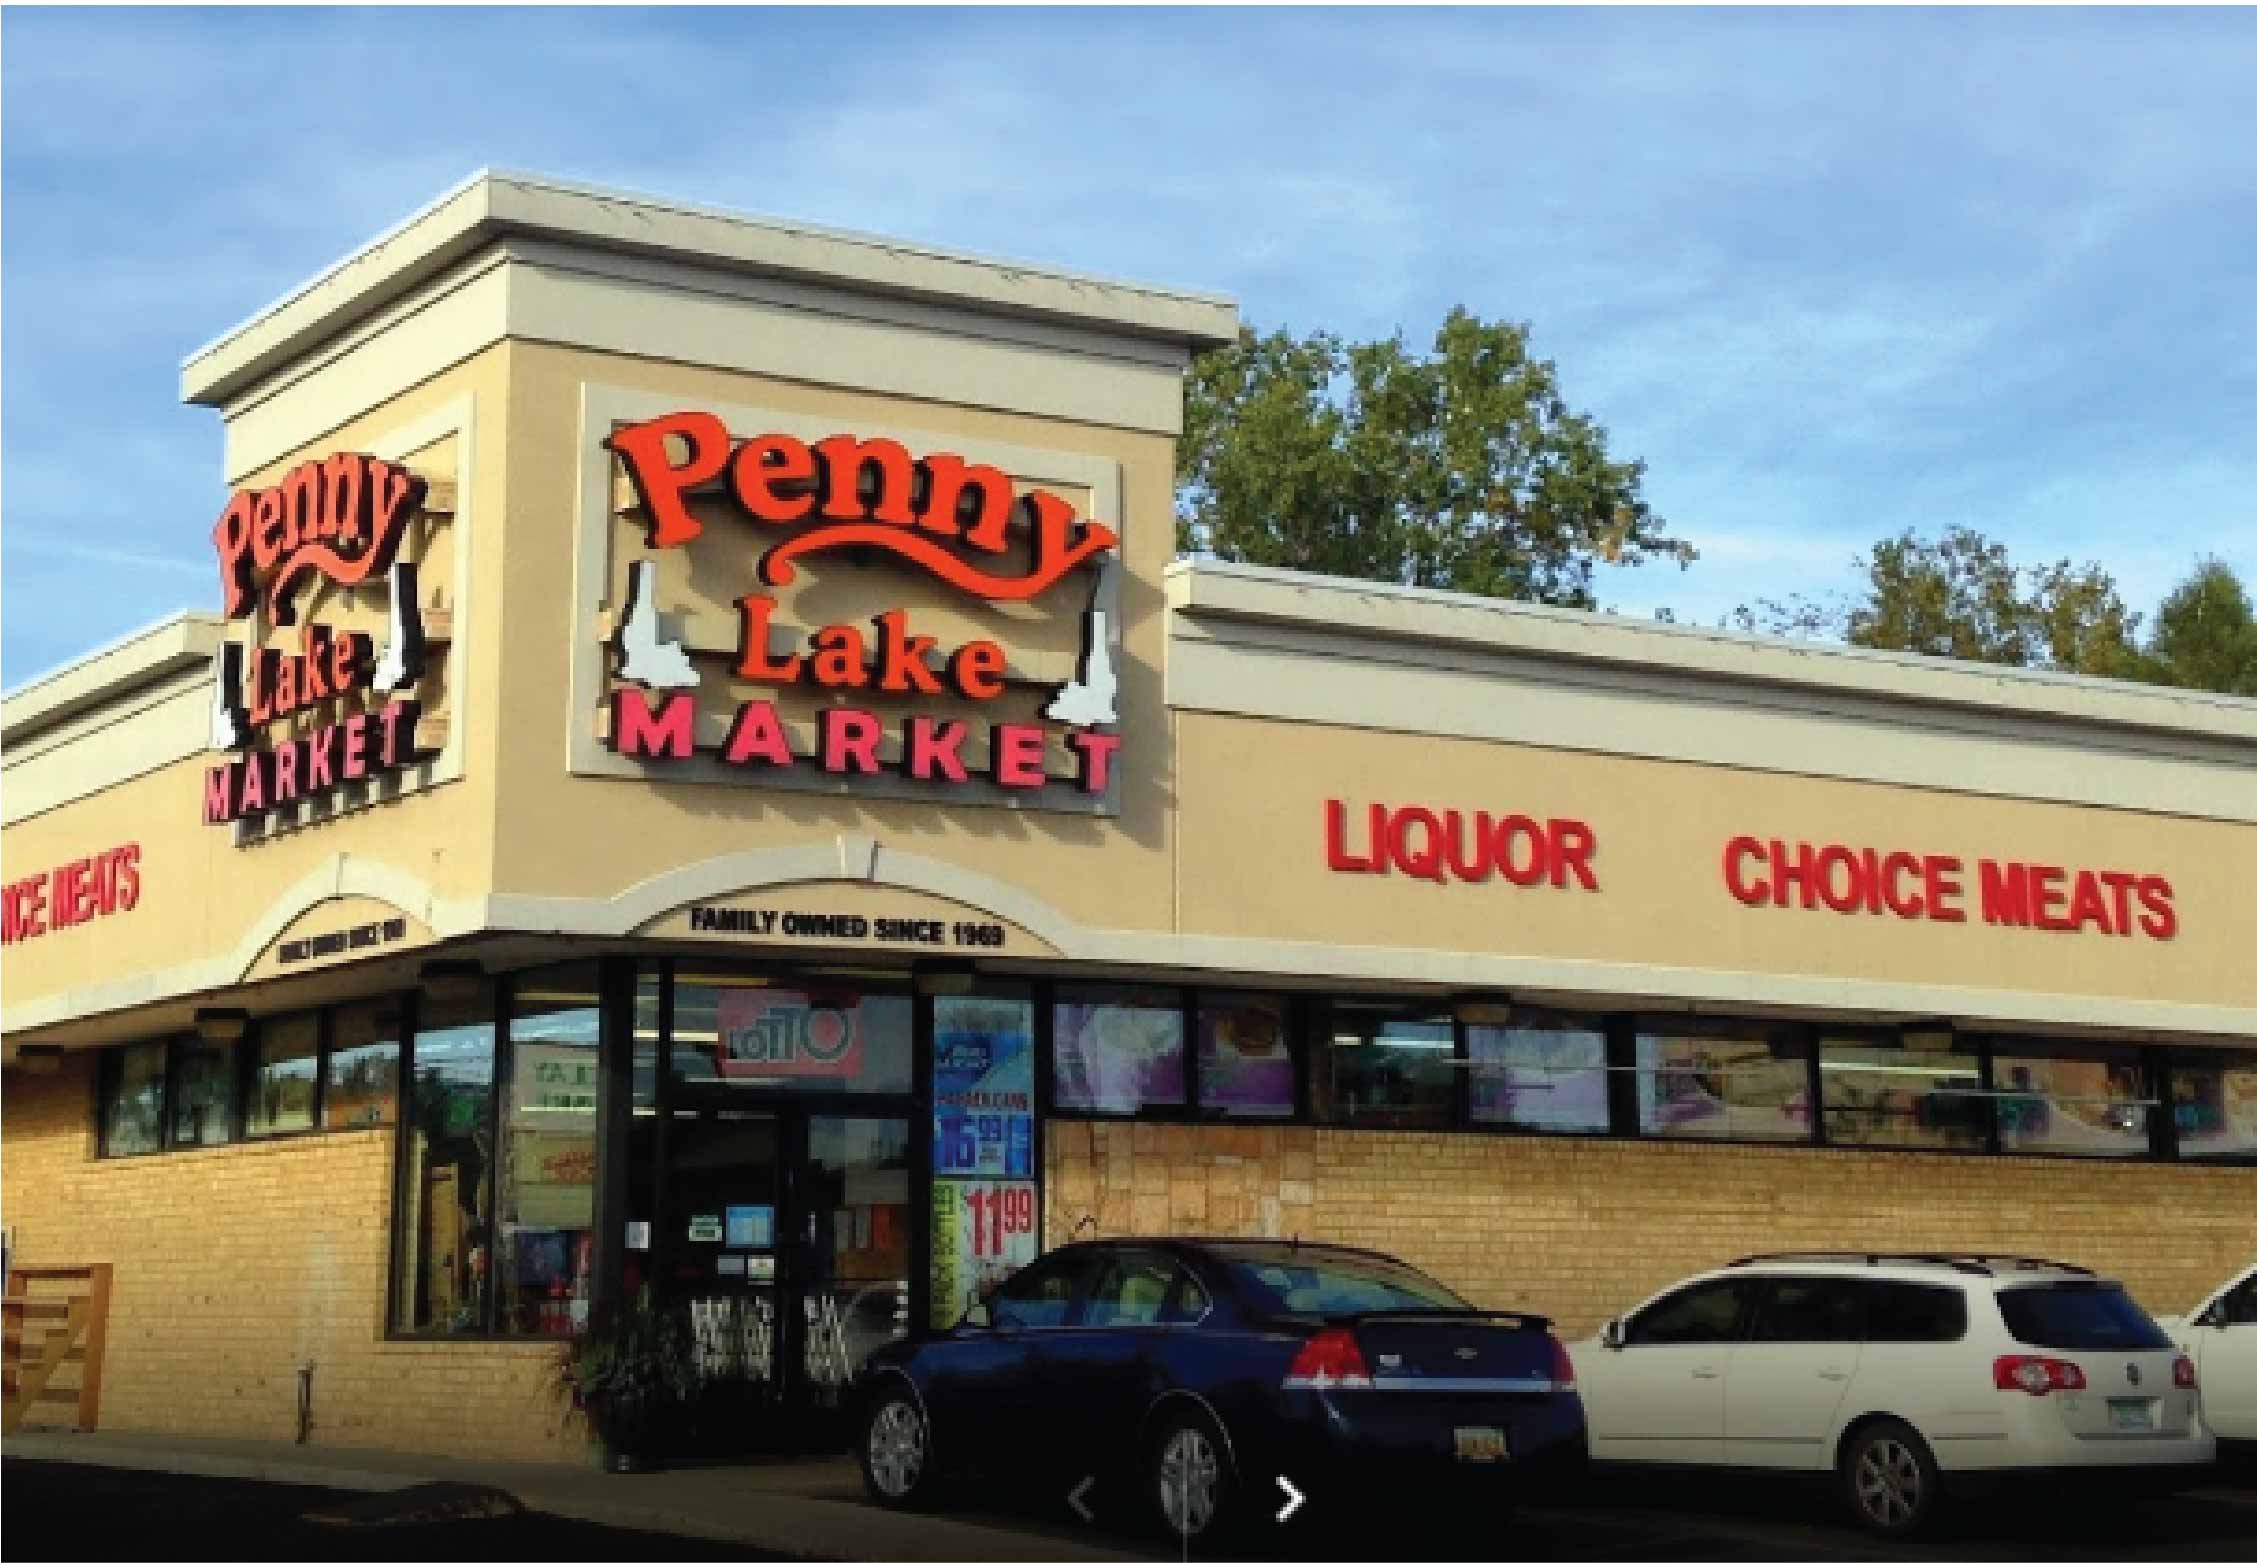 Small Business Spotlight: Penny Lake Market